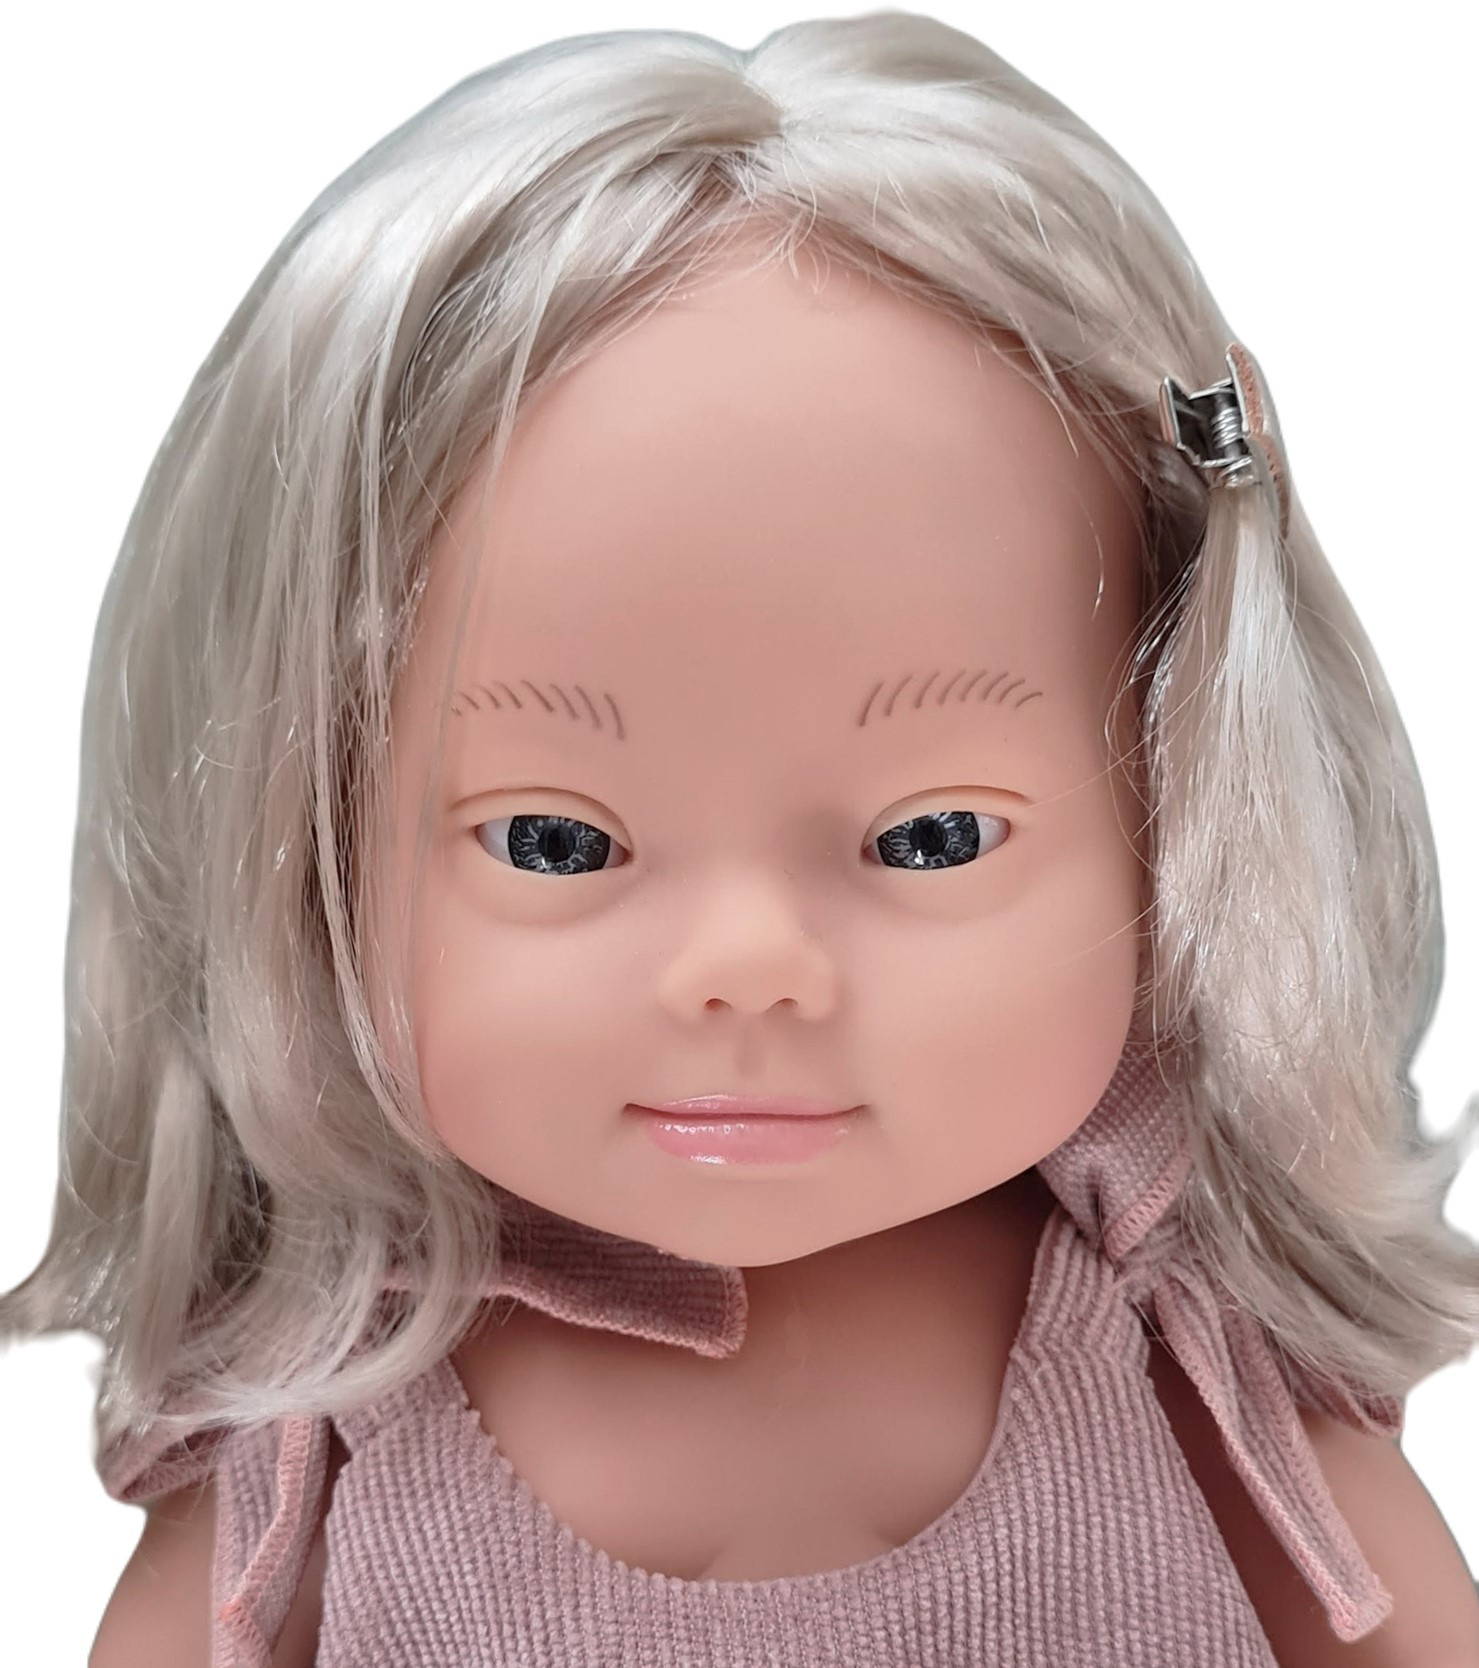 Miniland poppen Miniland doll European girl with Down Syndrome 38 cm